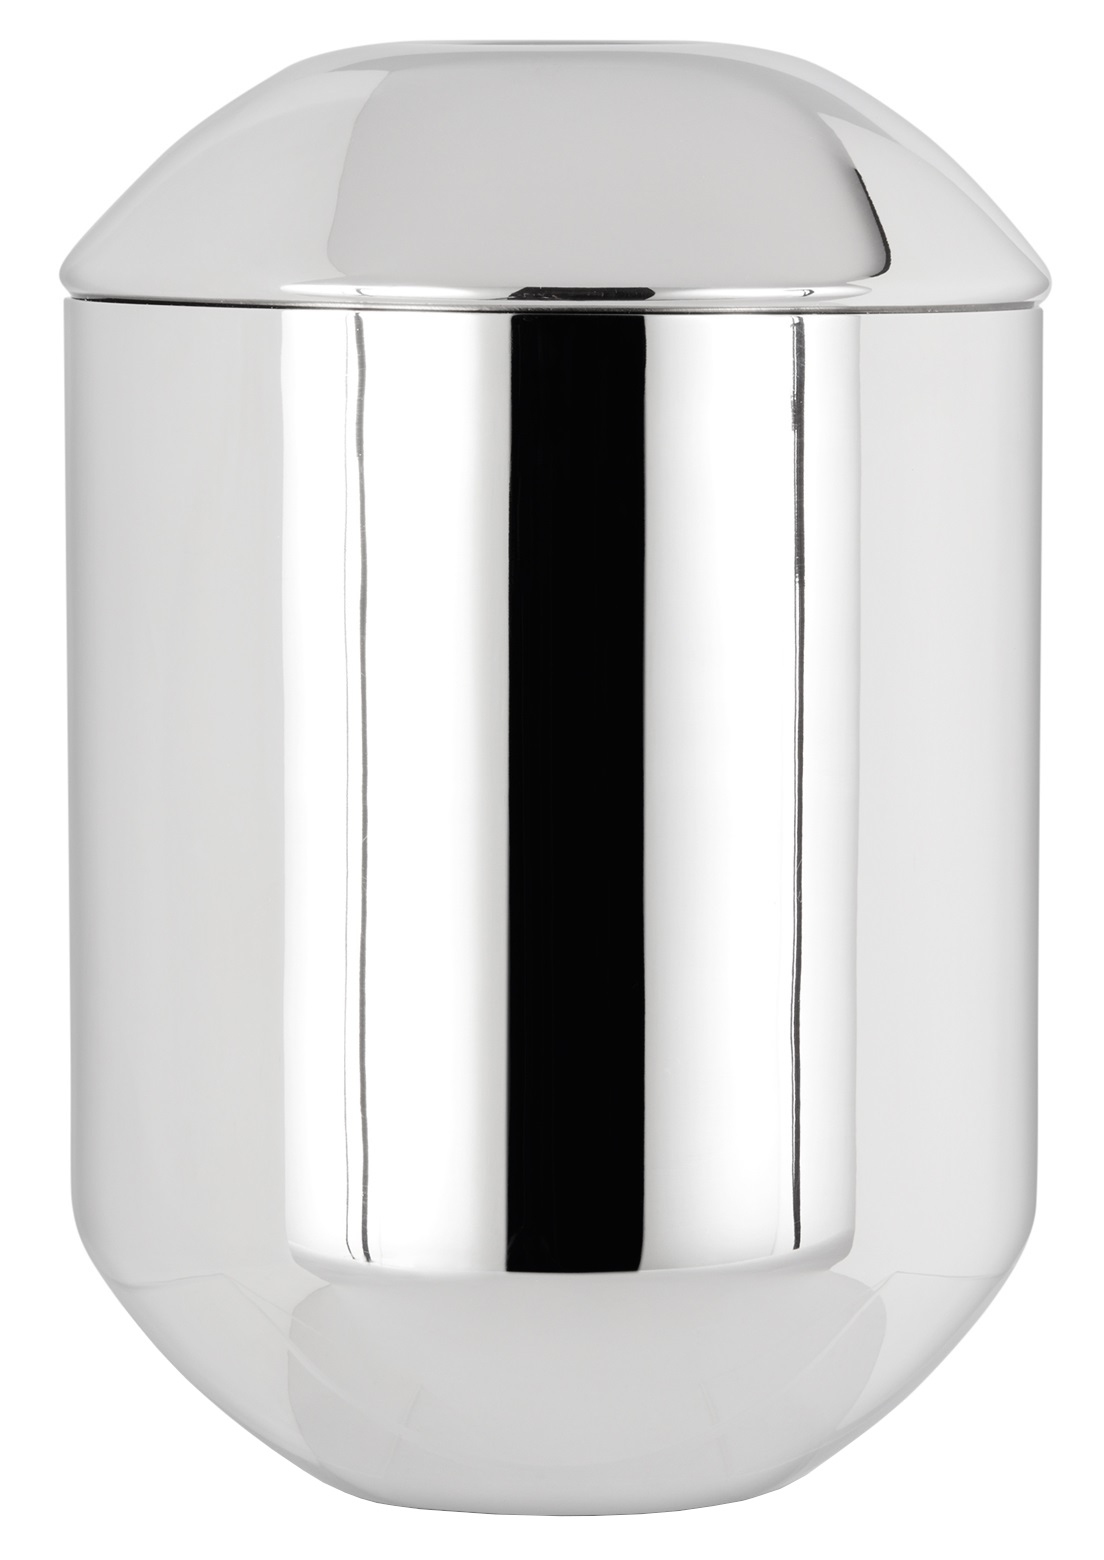 Tom Dixon Stainless Steel Tea Pot - Silver